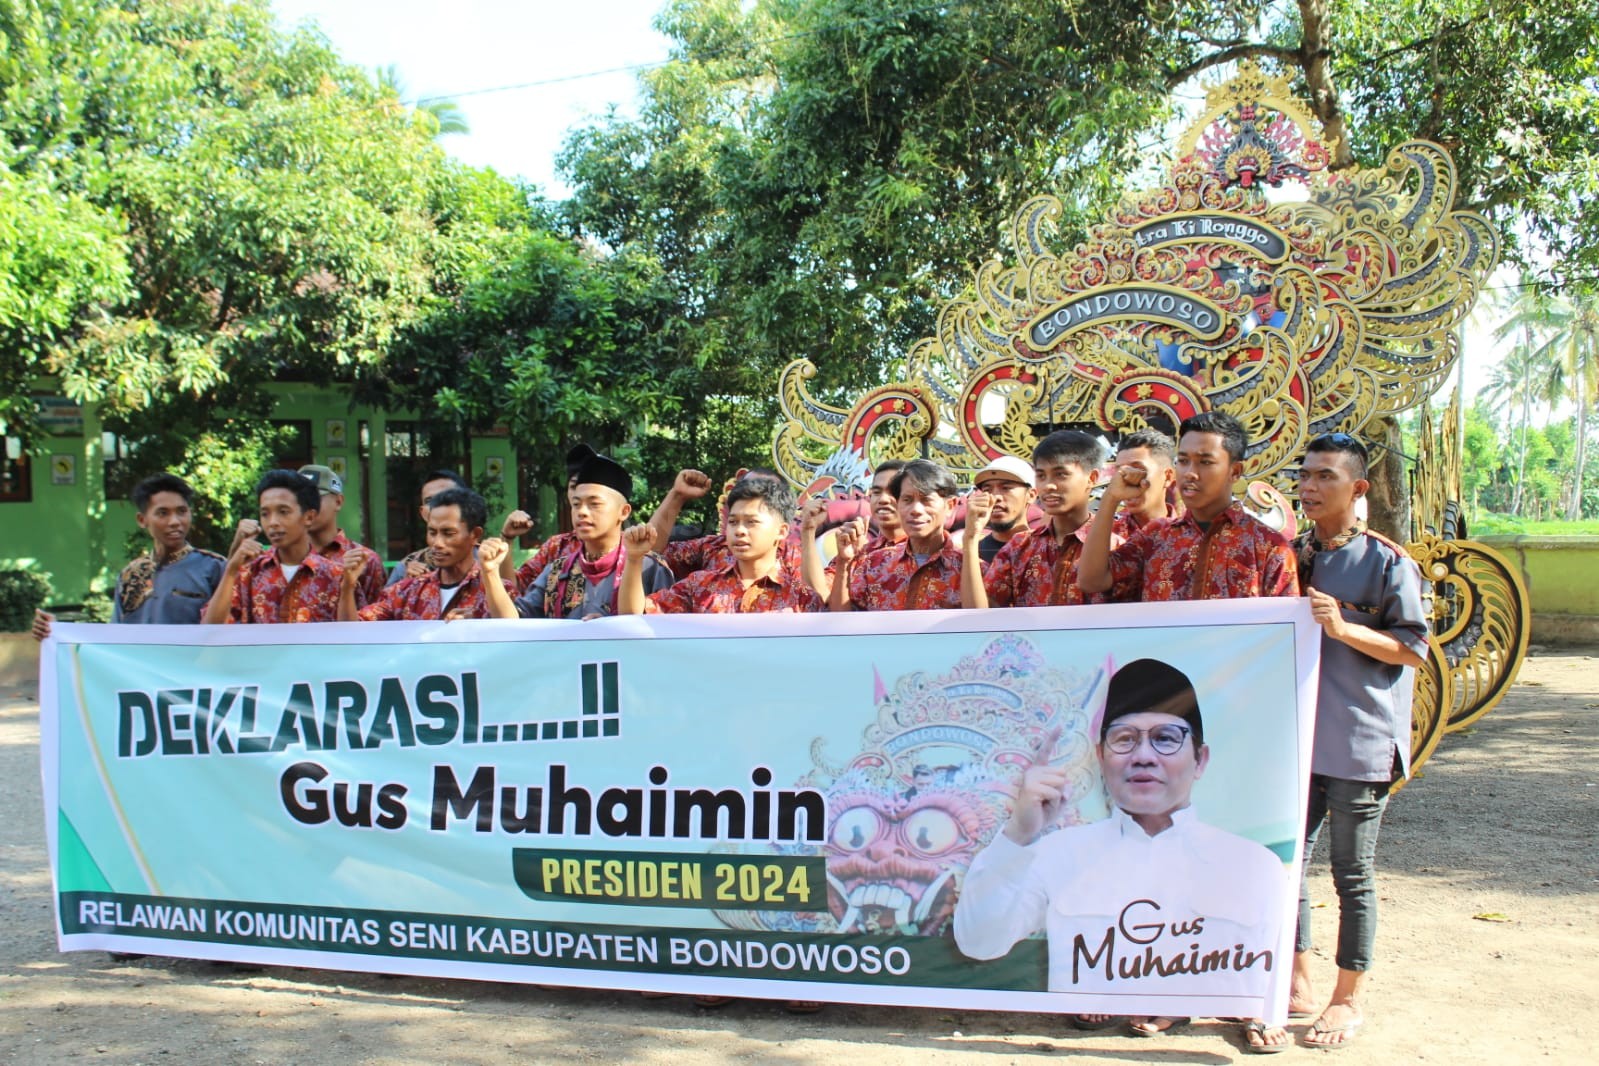 Relawan Komunitas Seni Kabupaten Bondowoso